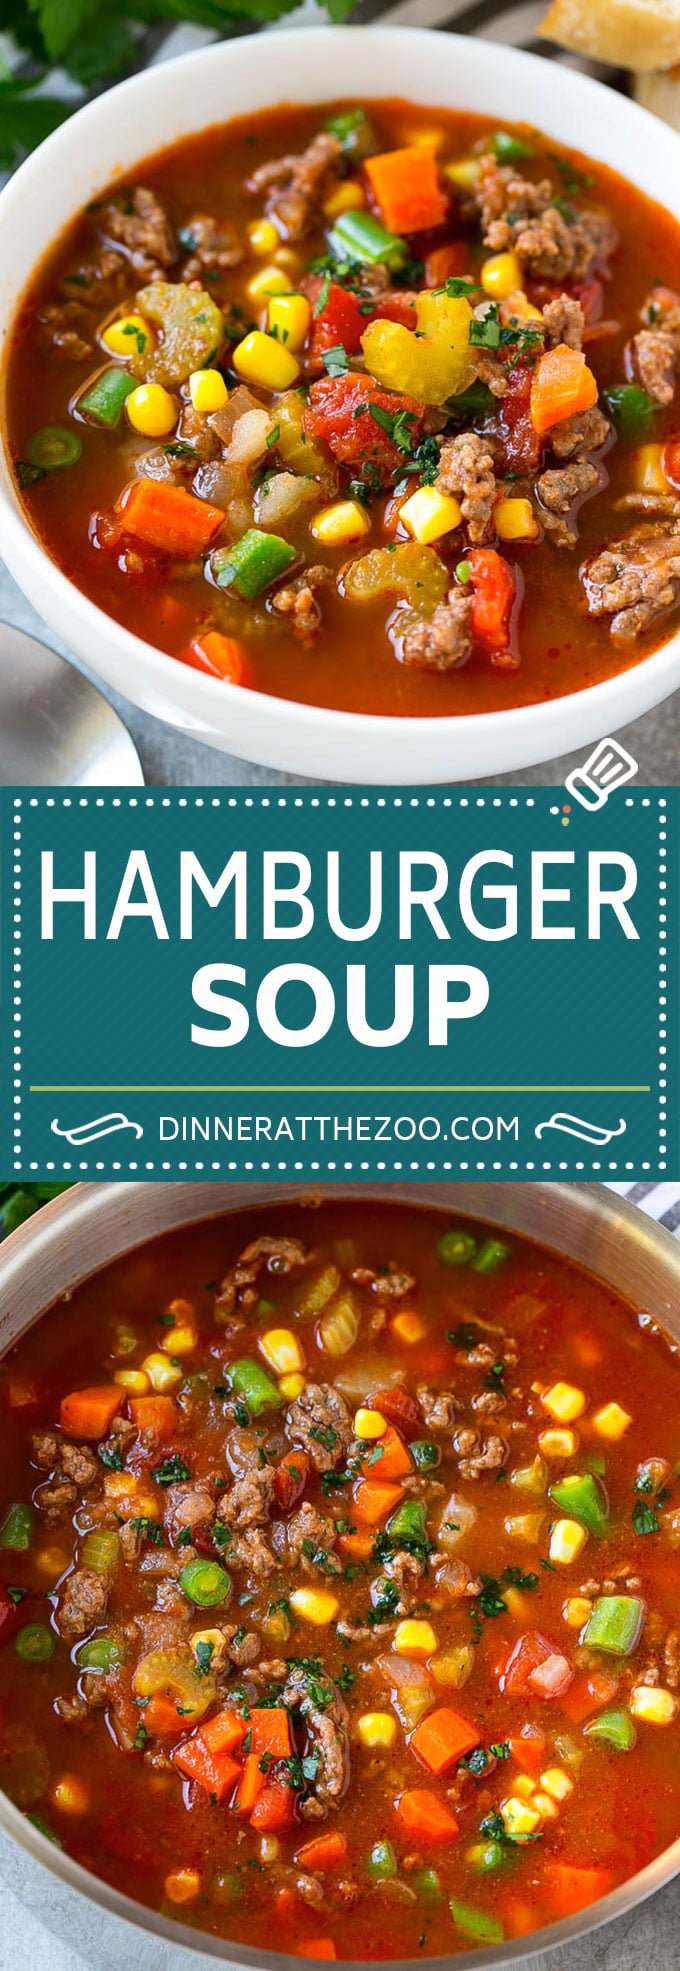 Hamburger Soup Recipe | Hamburger Stew | Ground Beef Soup #hamburger #soup #groundbeef #stew #dinner #dinneratthezoo